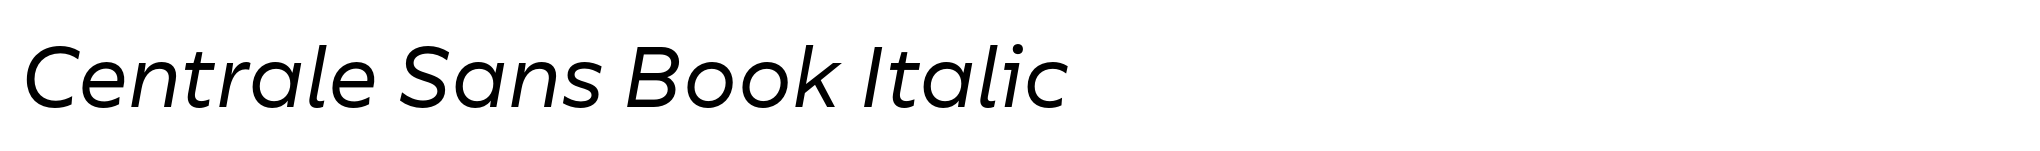 Centrale Sans Book Italic image